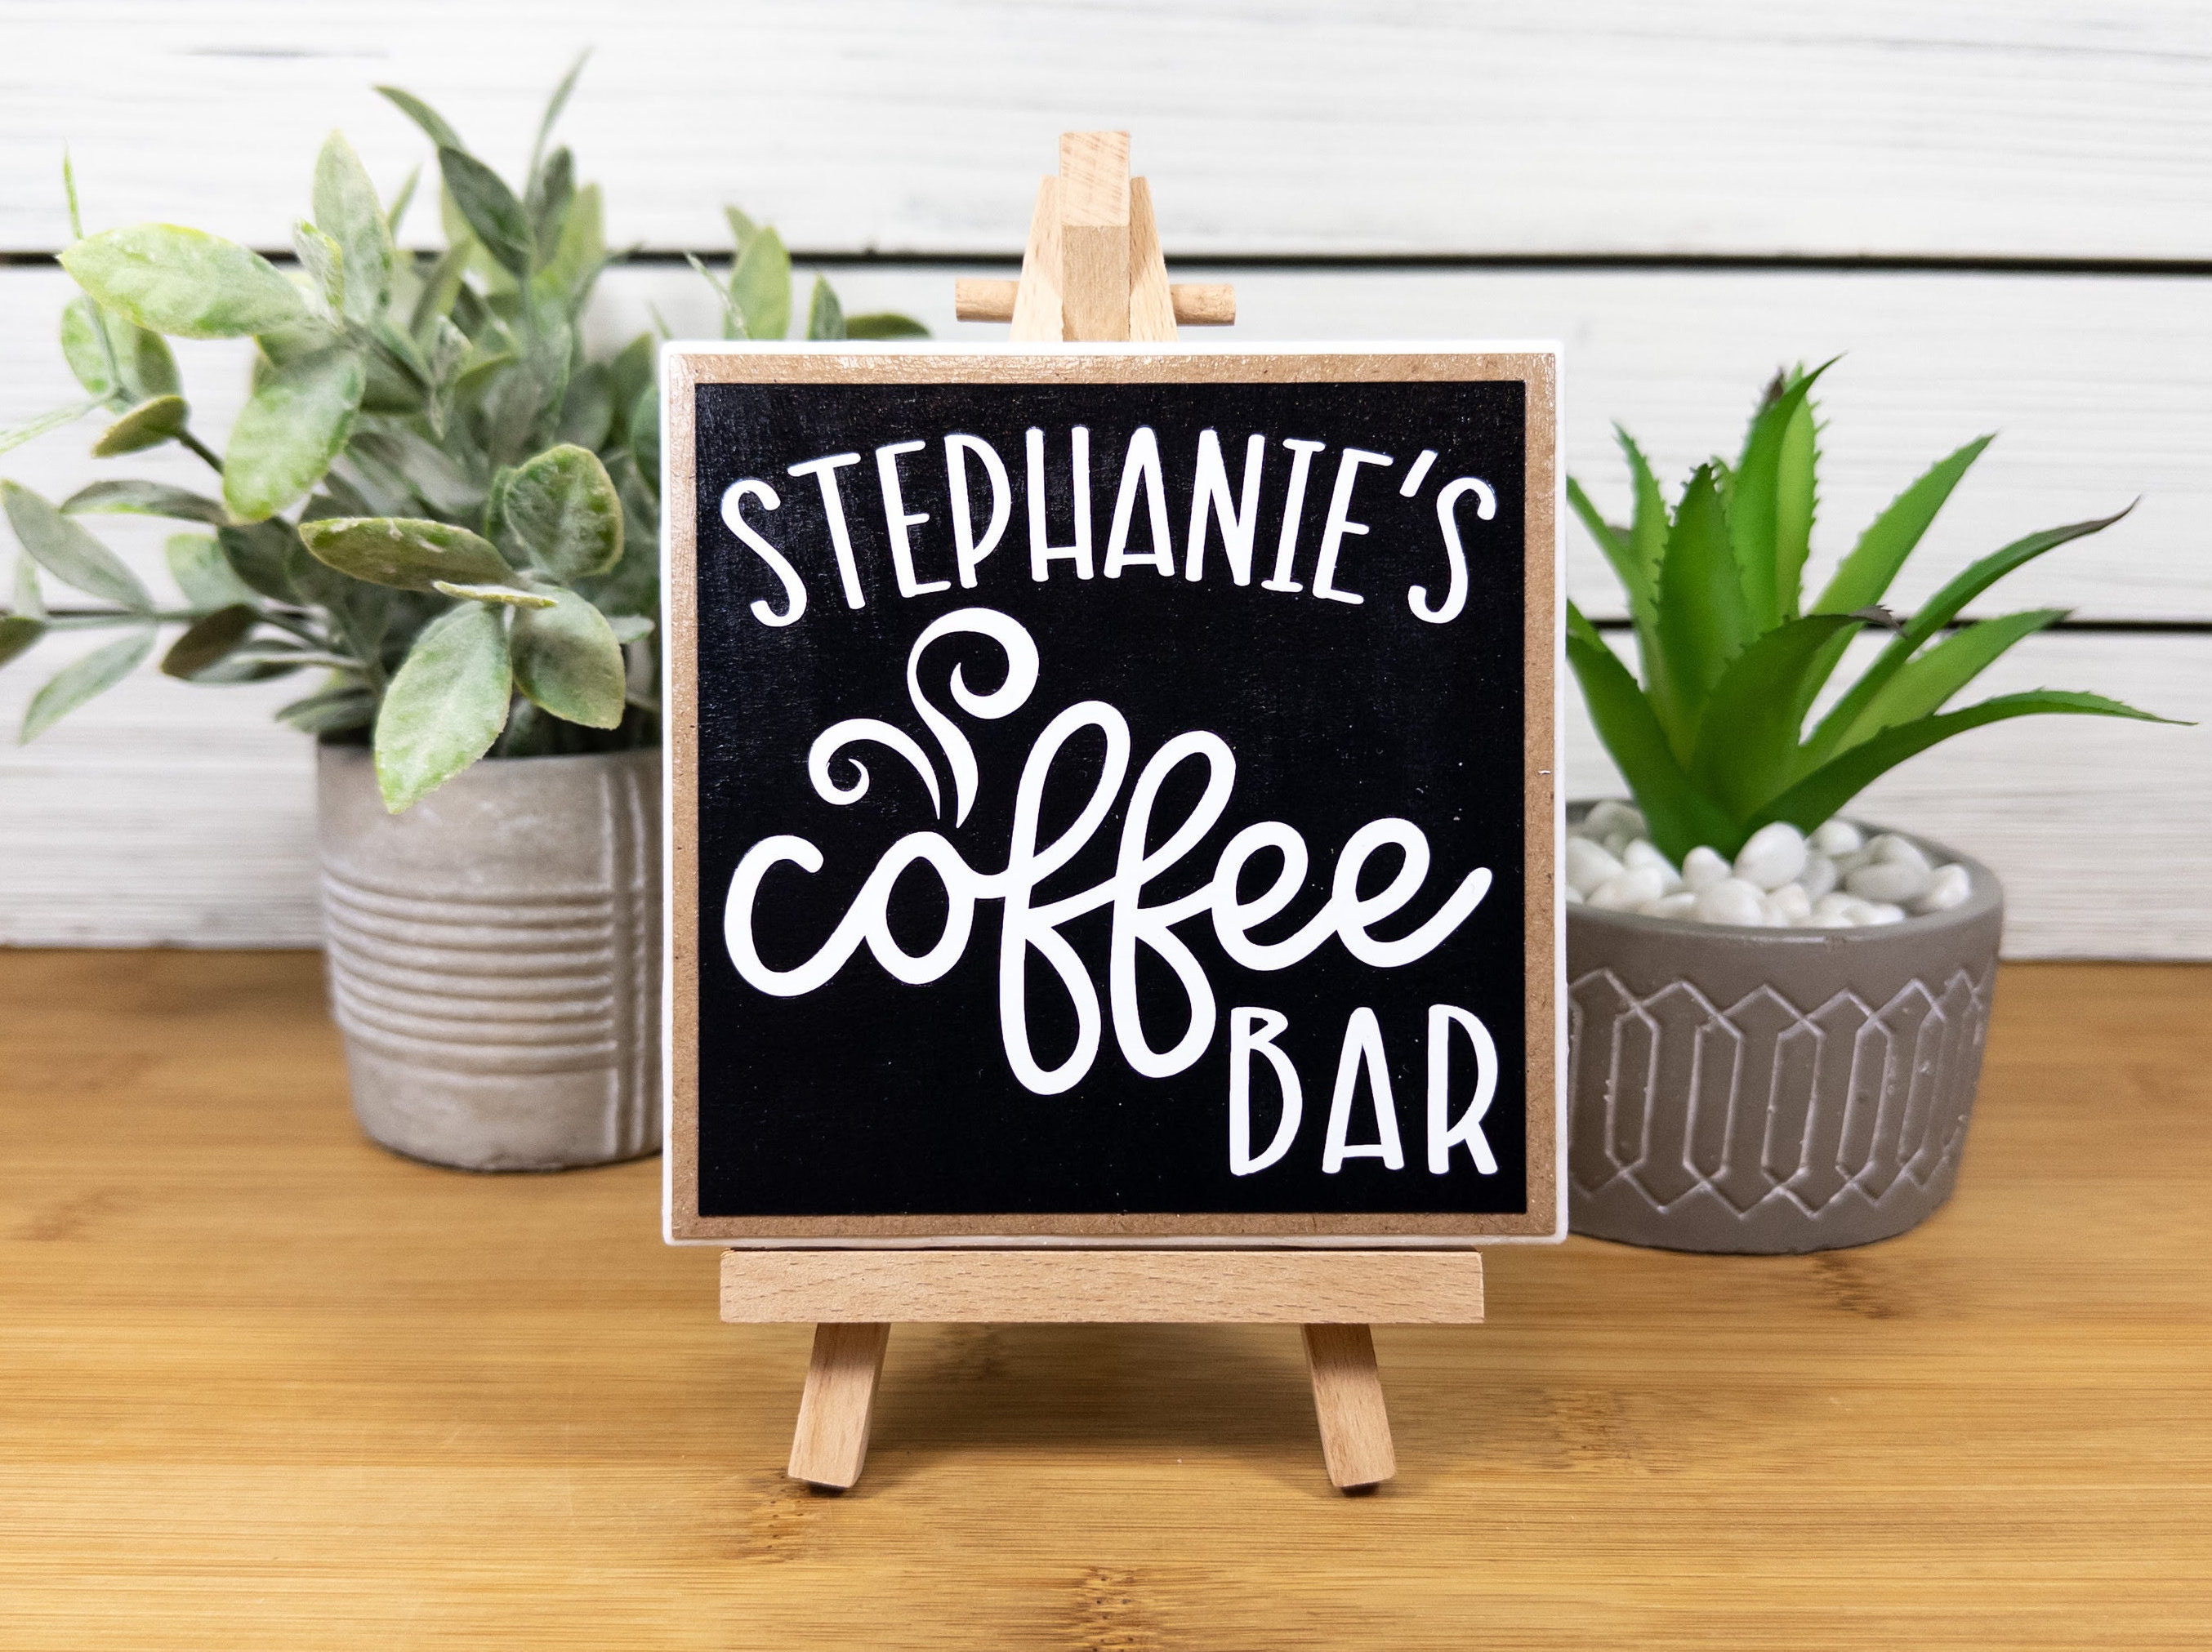  WODORO Custom Coffee Bar Wood Sign (Not Carved or Neon